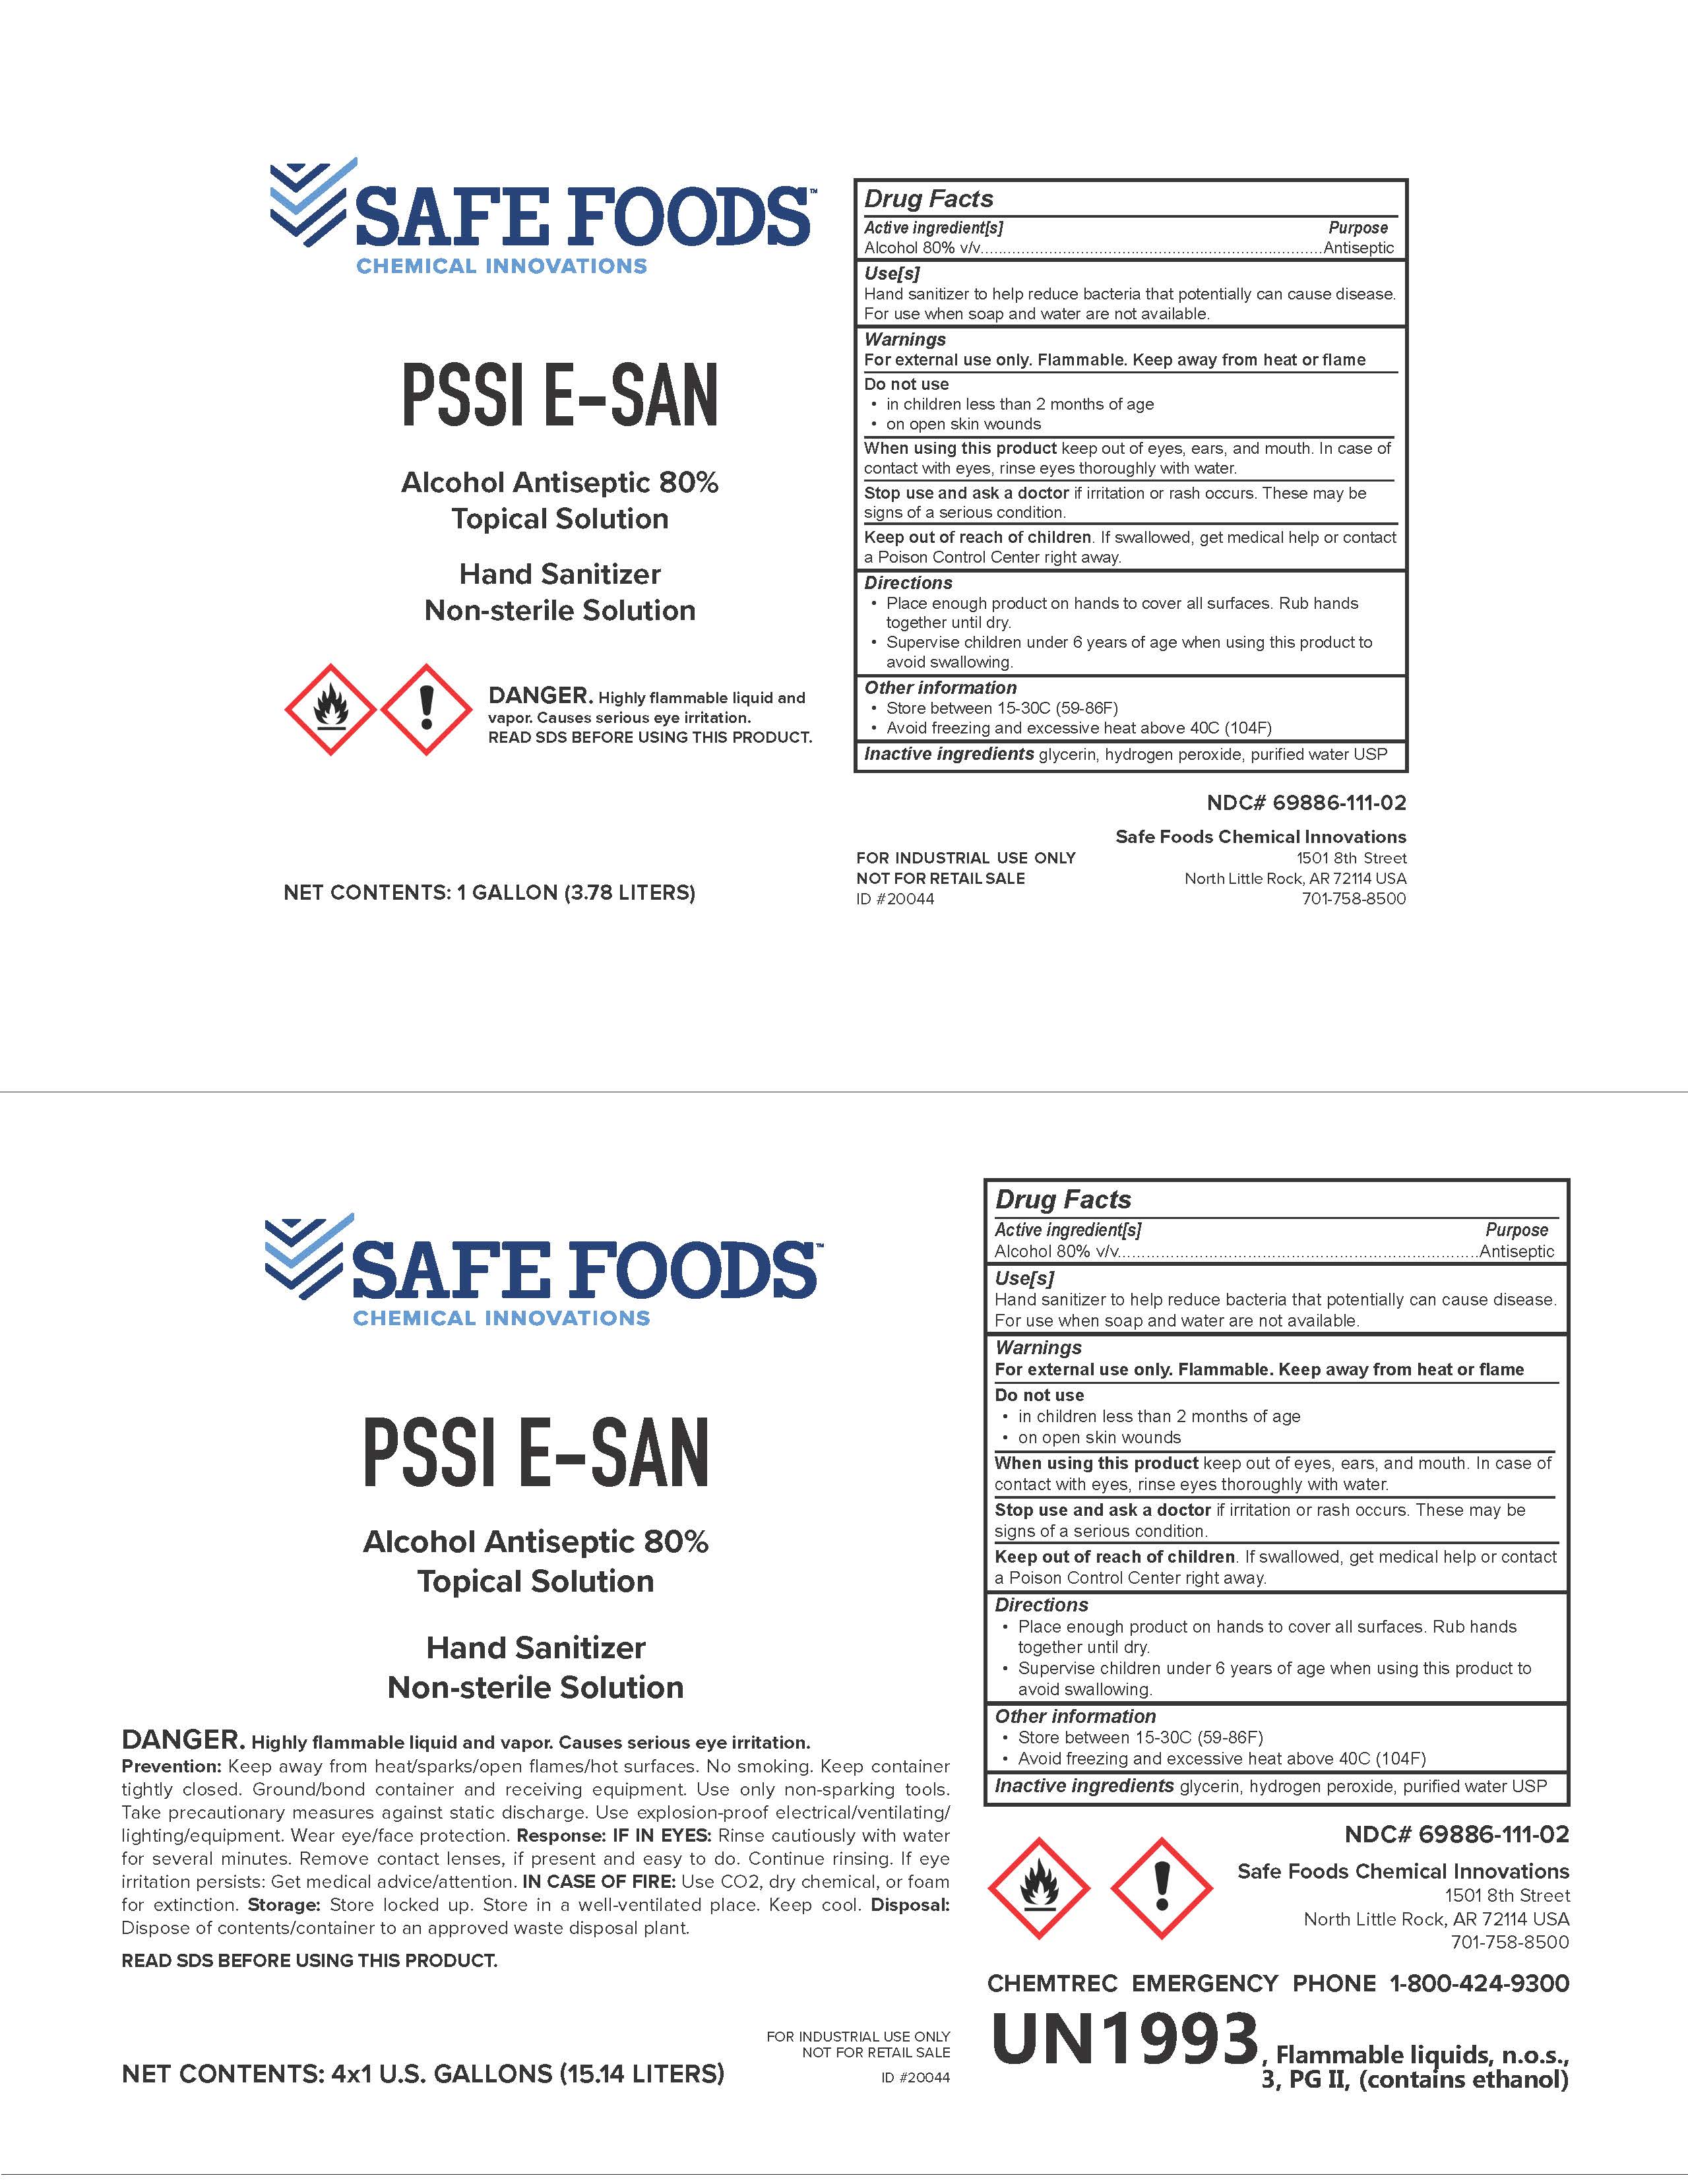 PSSI E-San Label